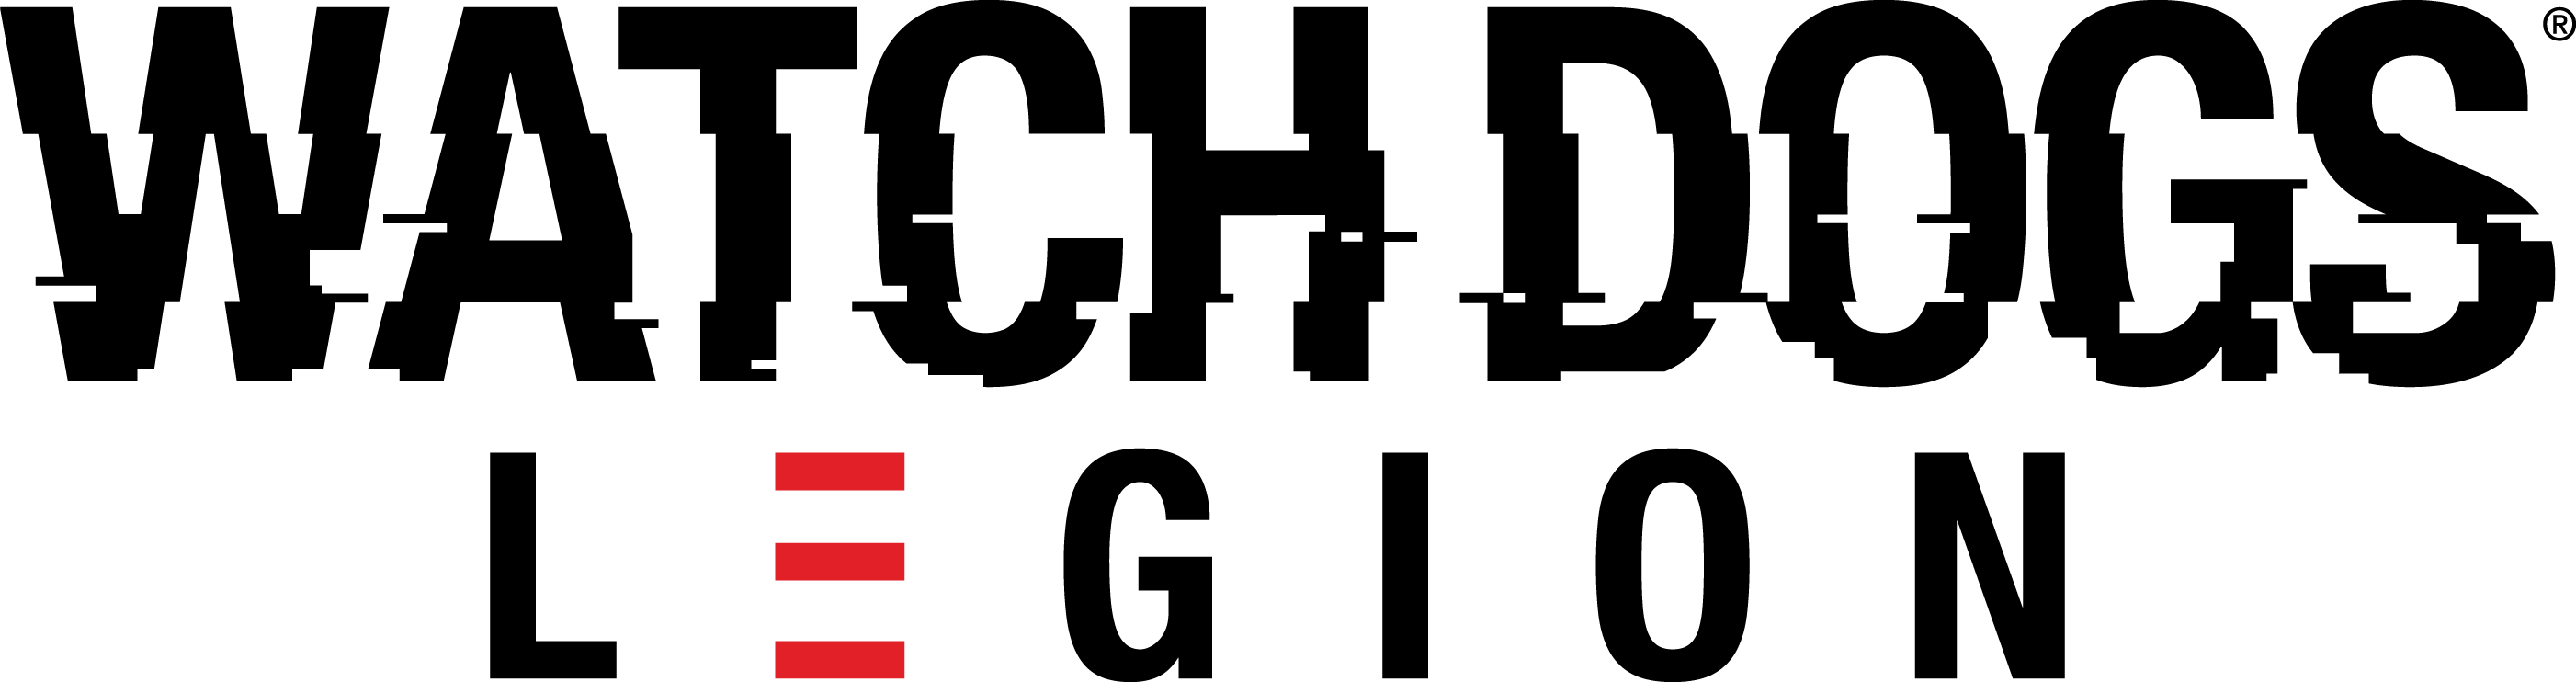 Watch Dogs Black Logo Transparent File